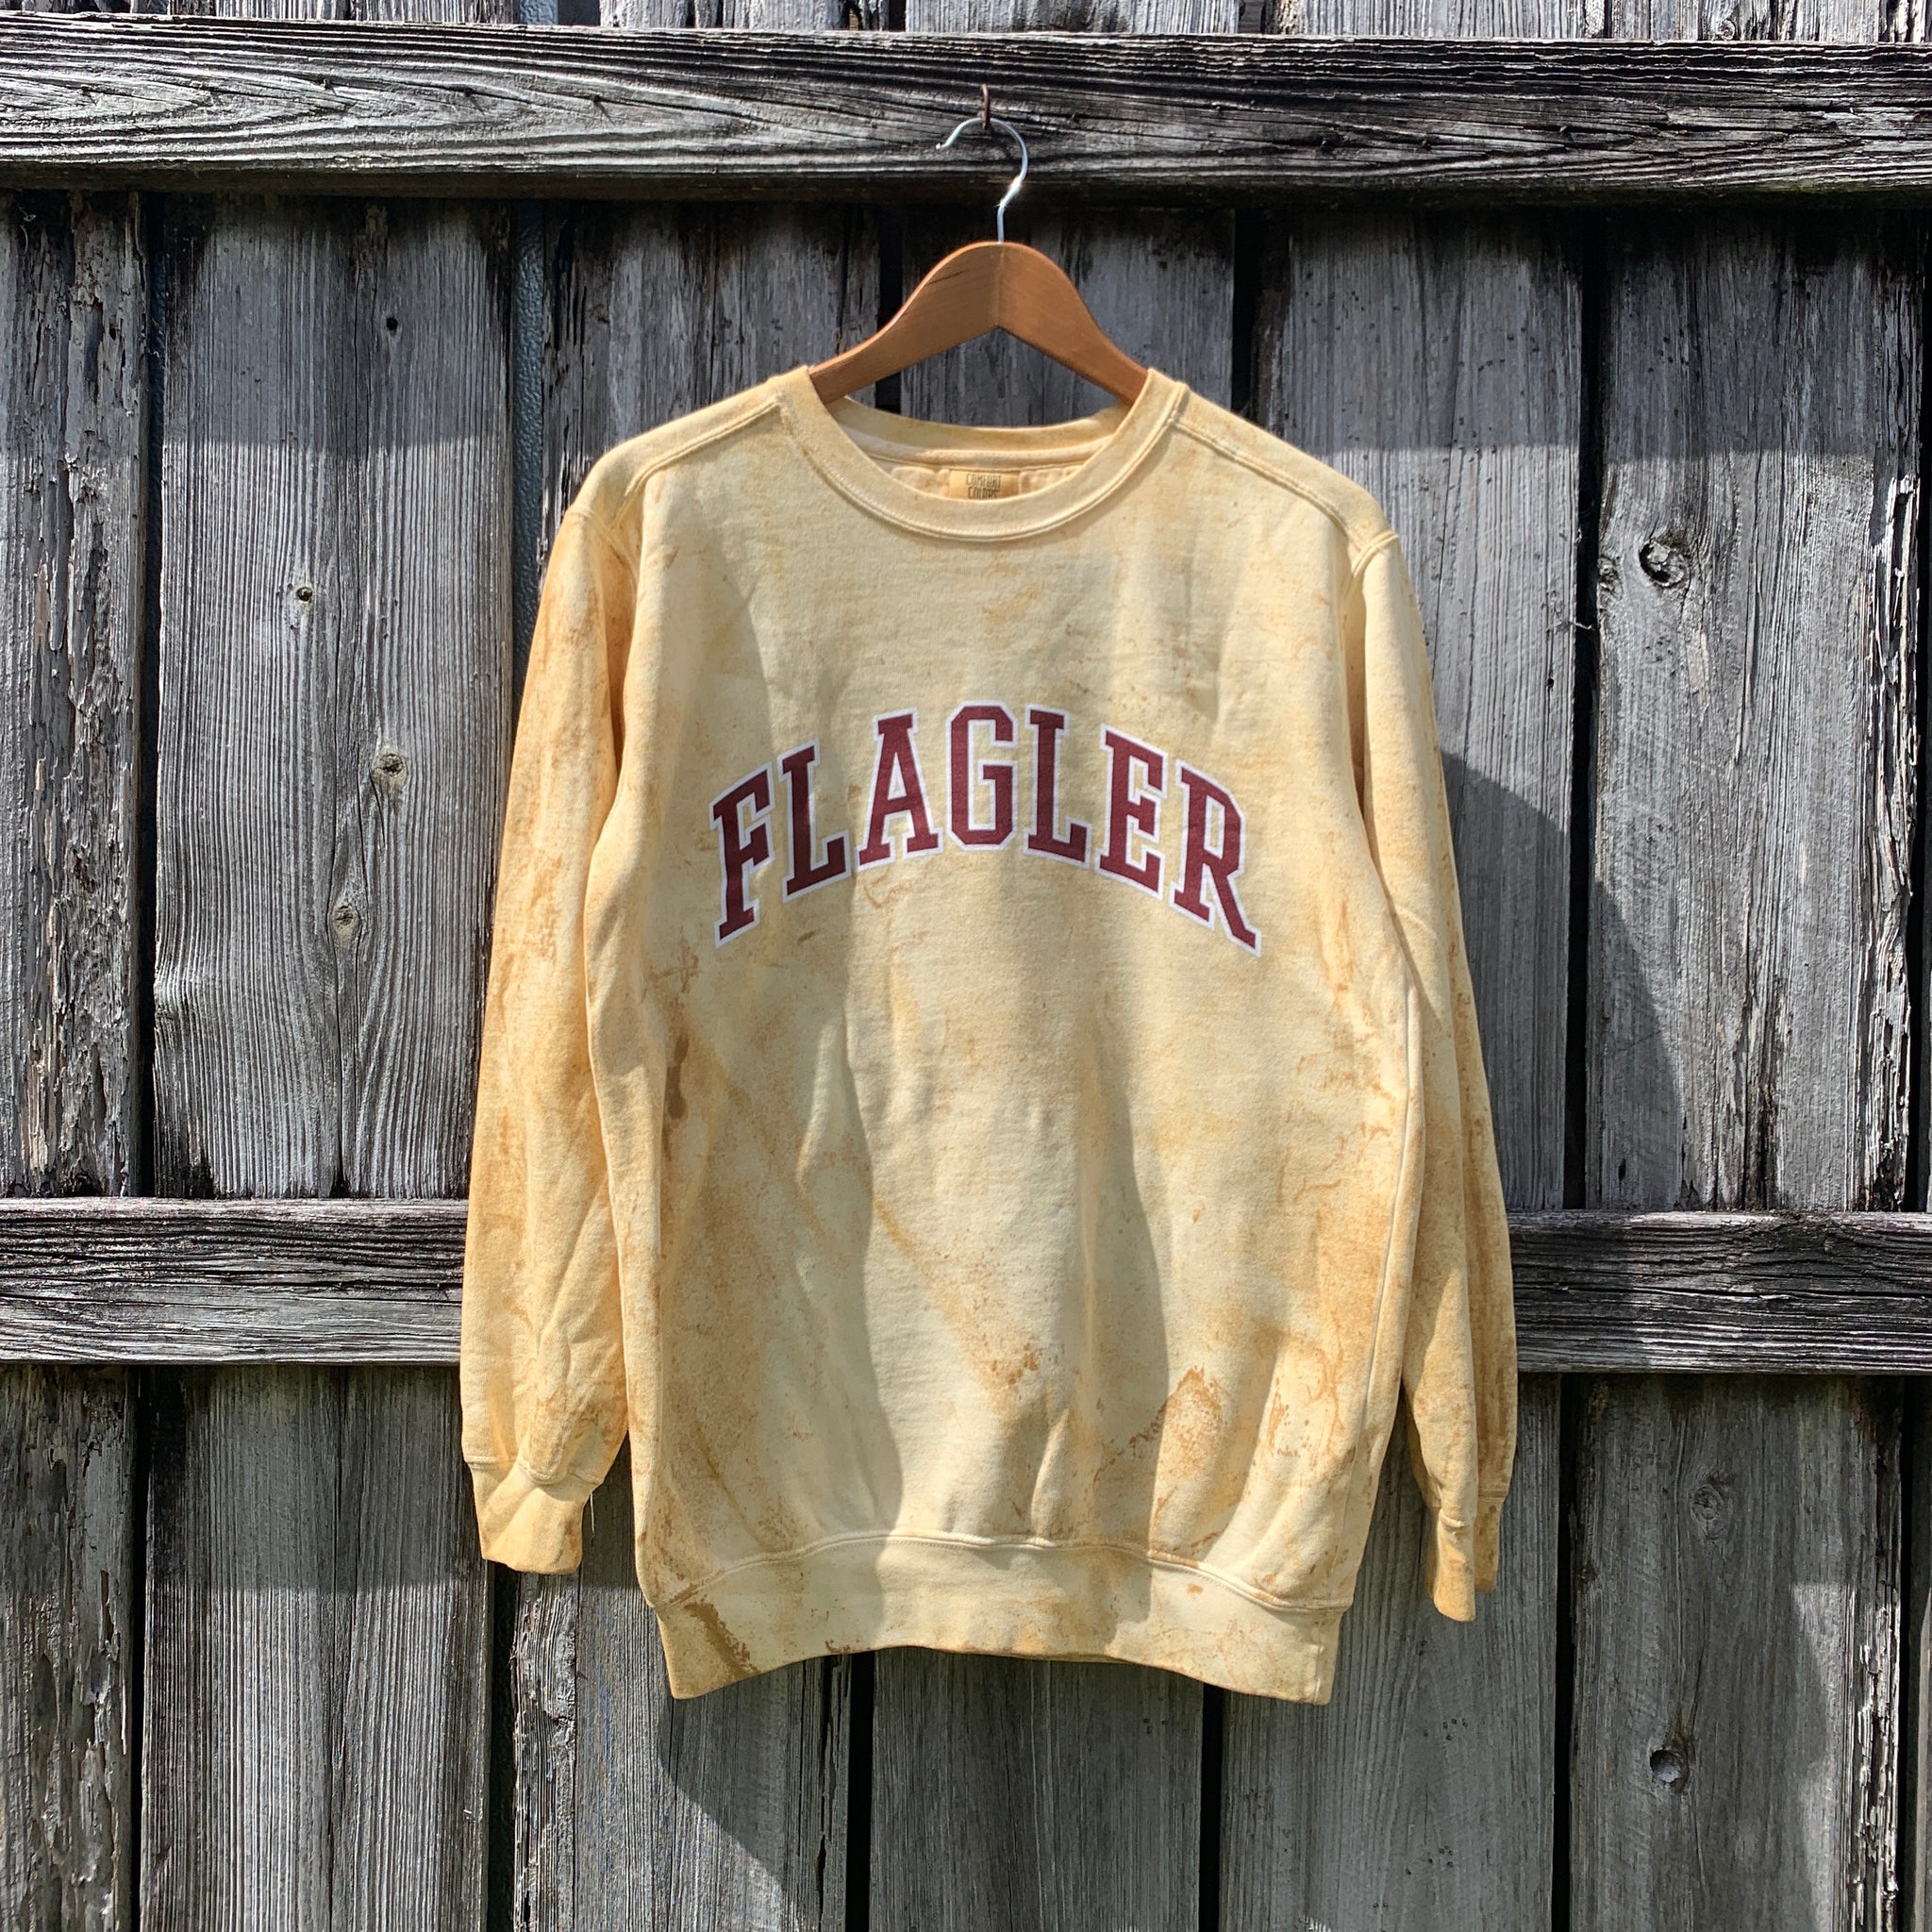 Flagler's Legacy